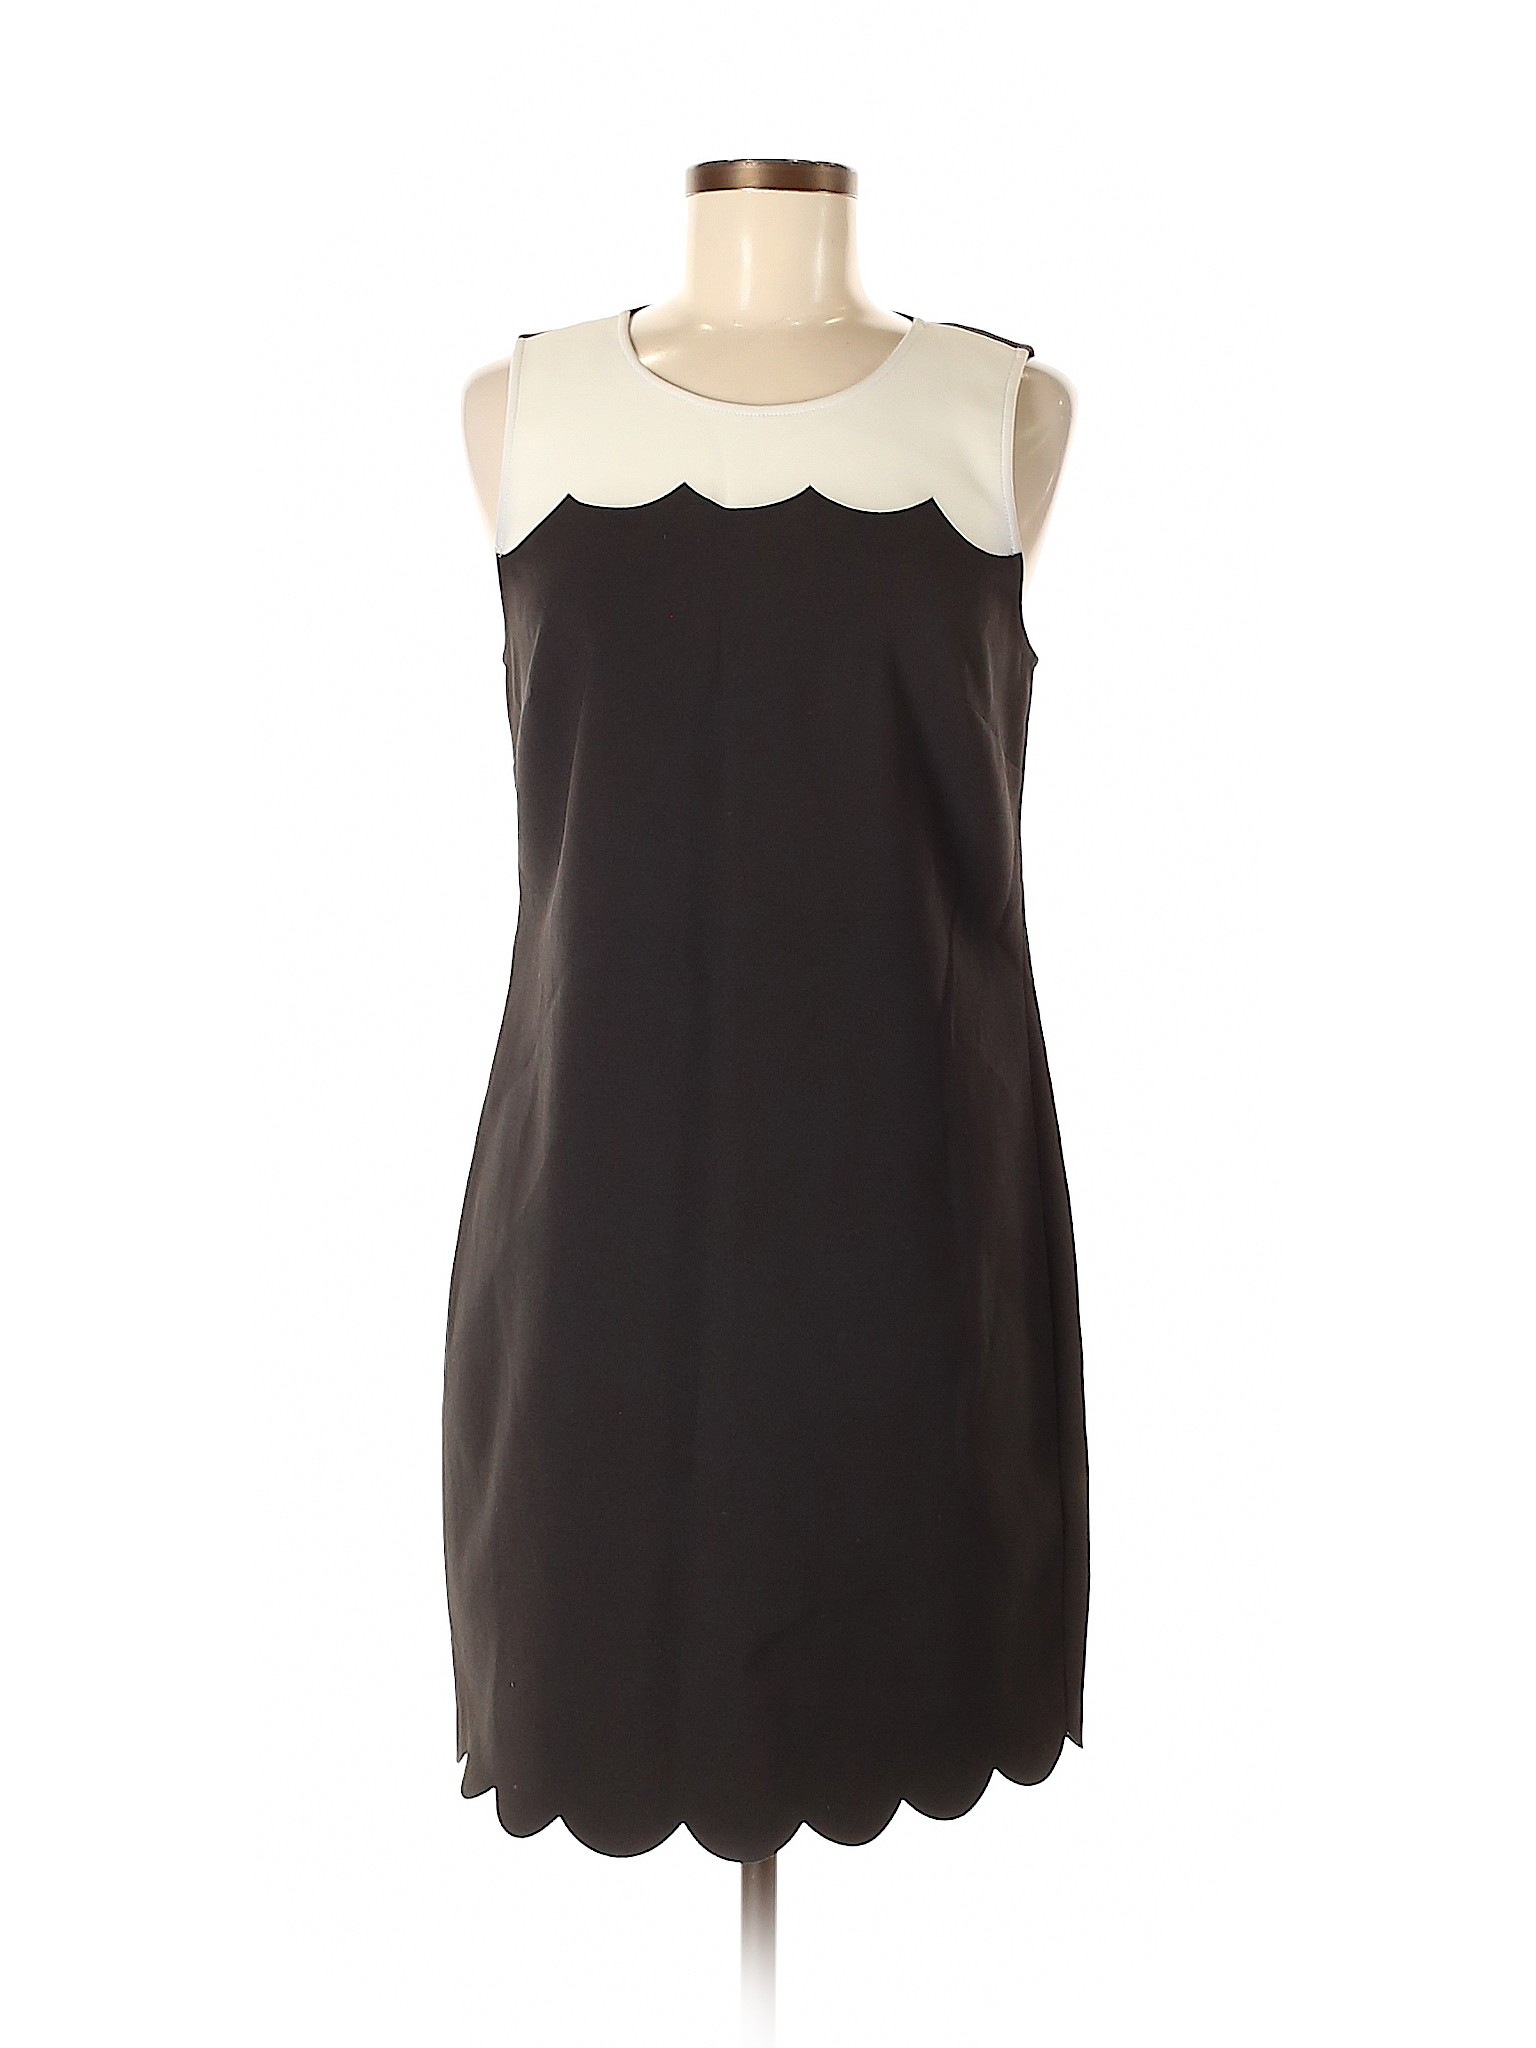 J. Crew Factory Store Women Black Casual Dress 6 | eBay